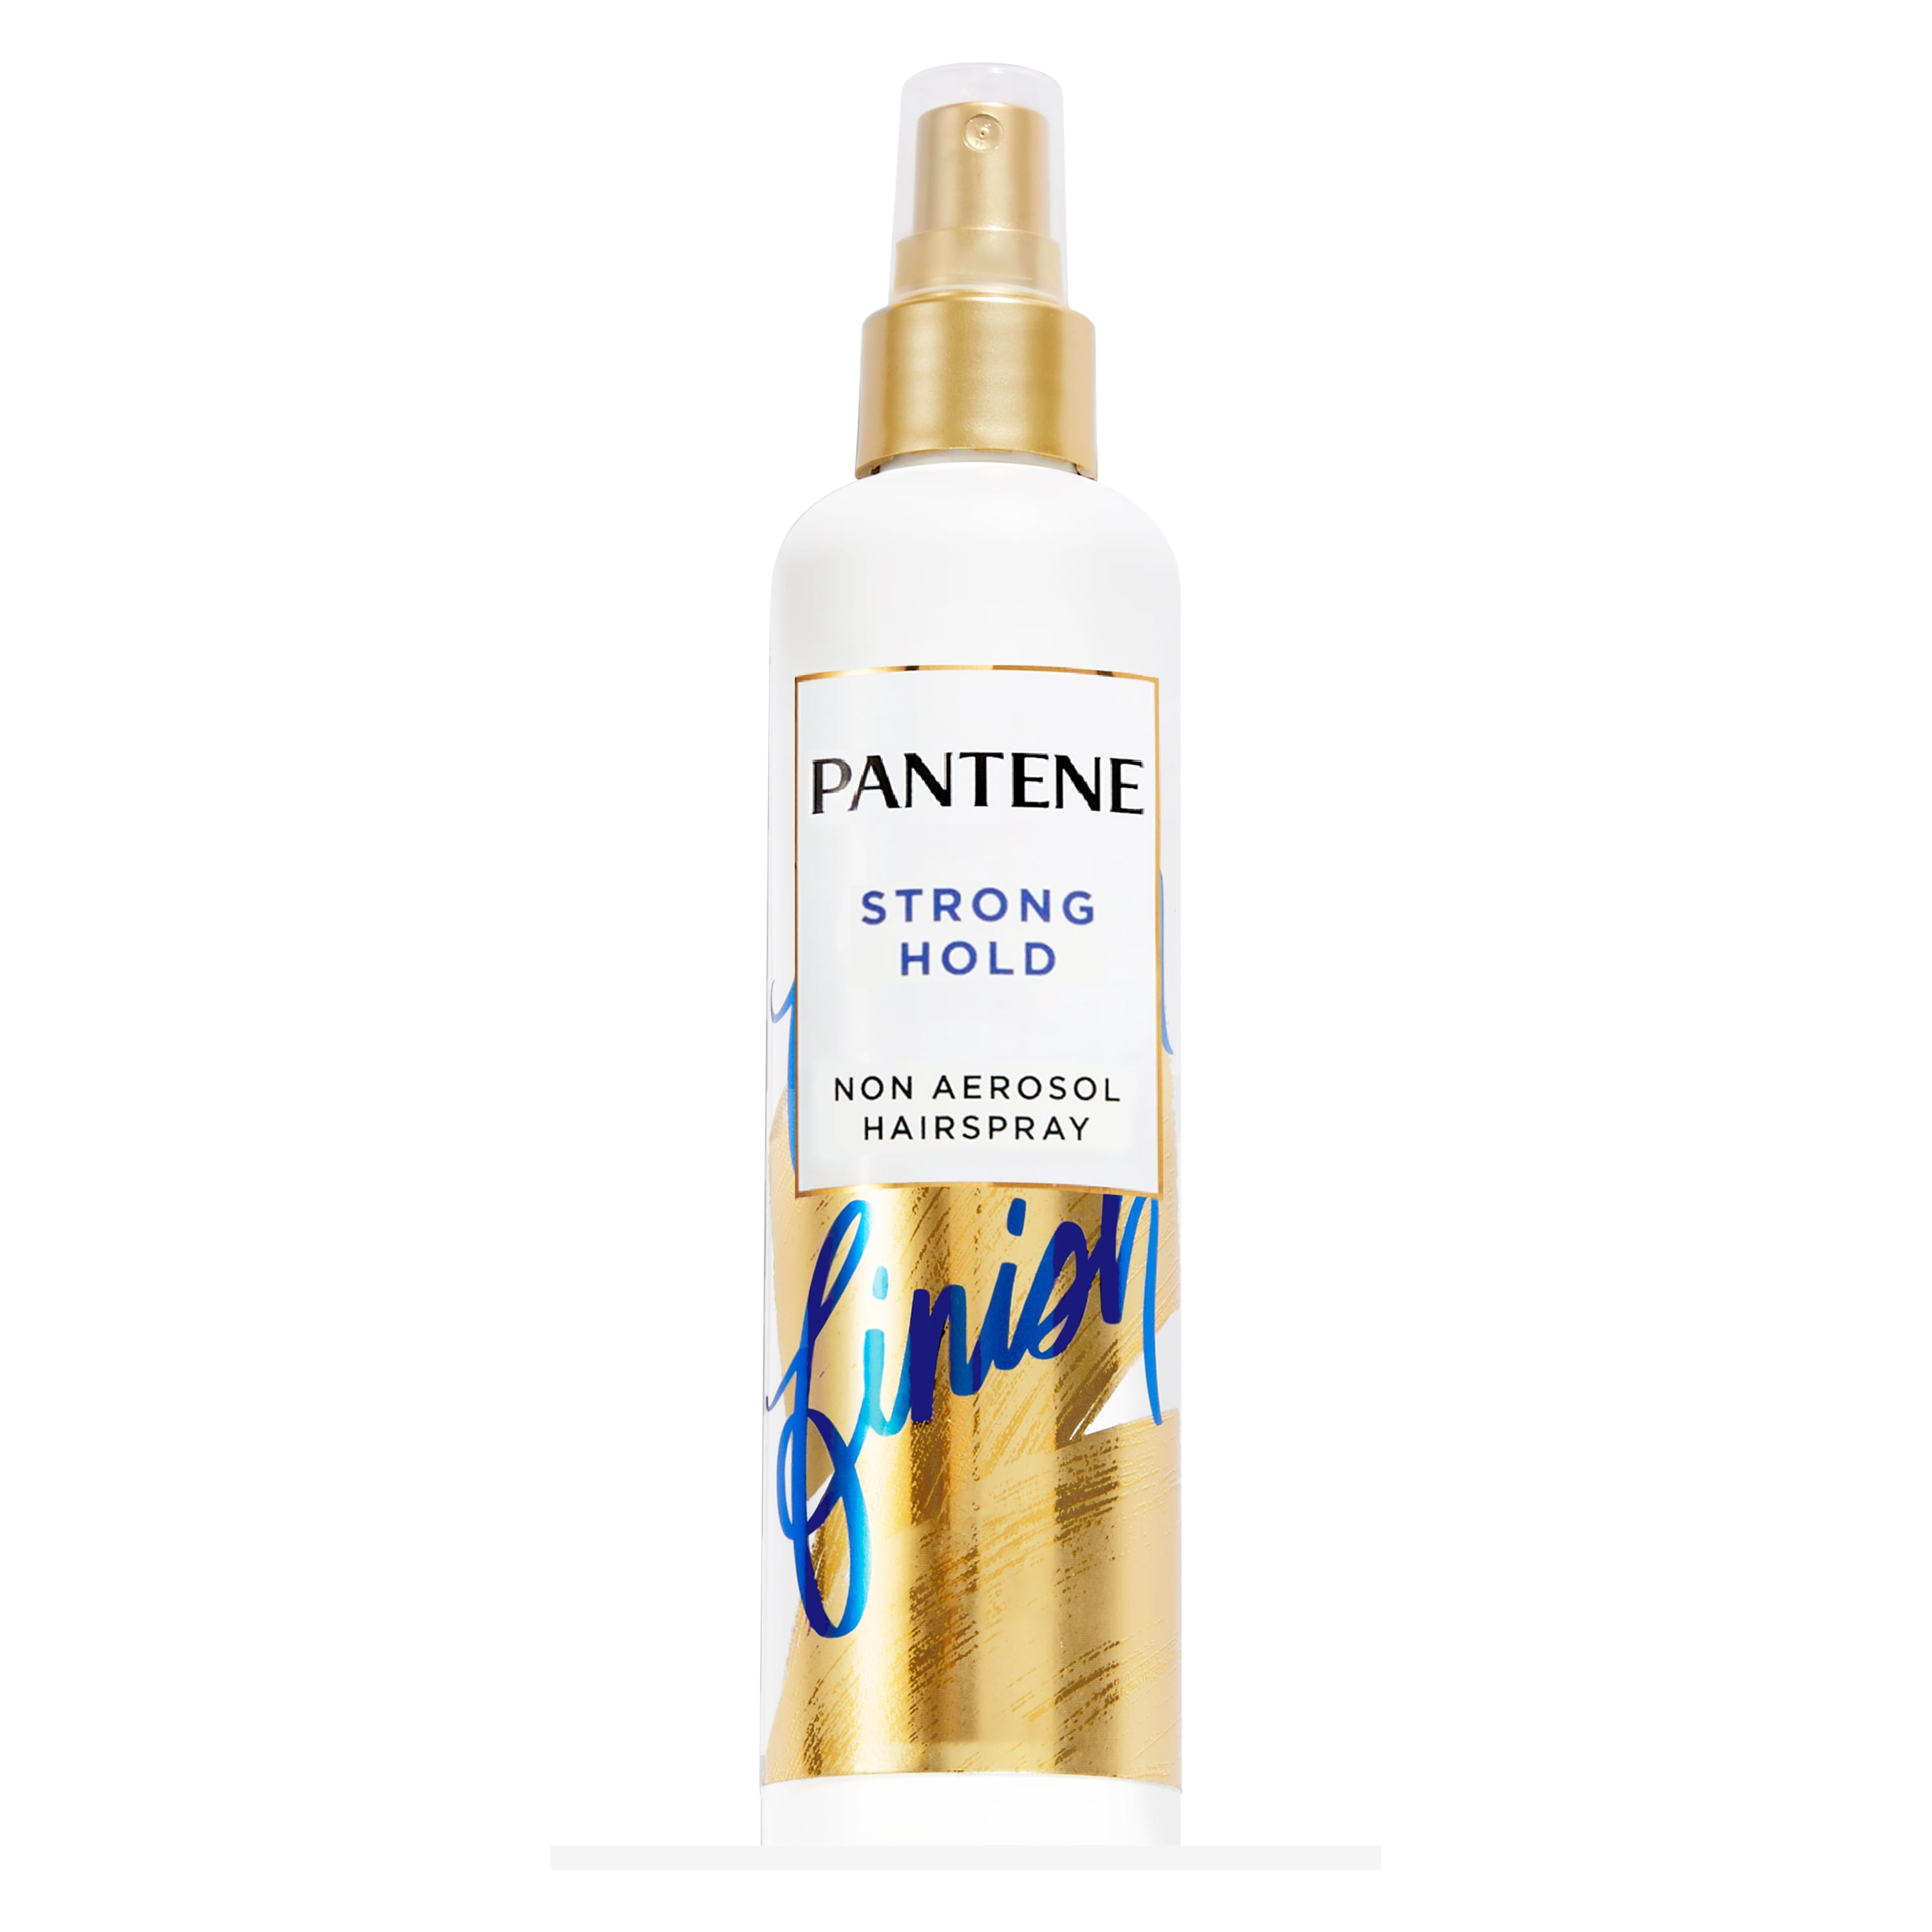 Pantene Pro-V Non-Aerosol Hairspray, Extra Strong Hold, 8.5 oz